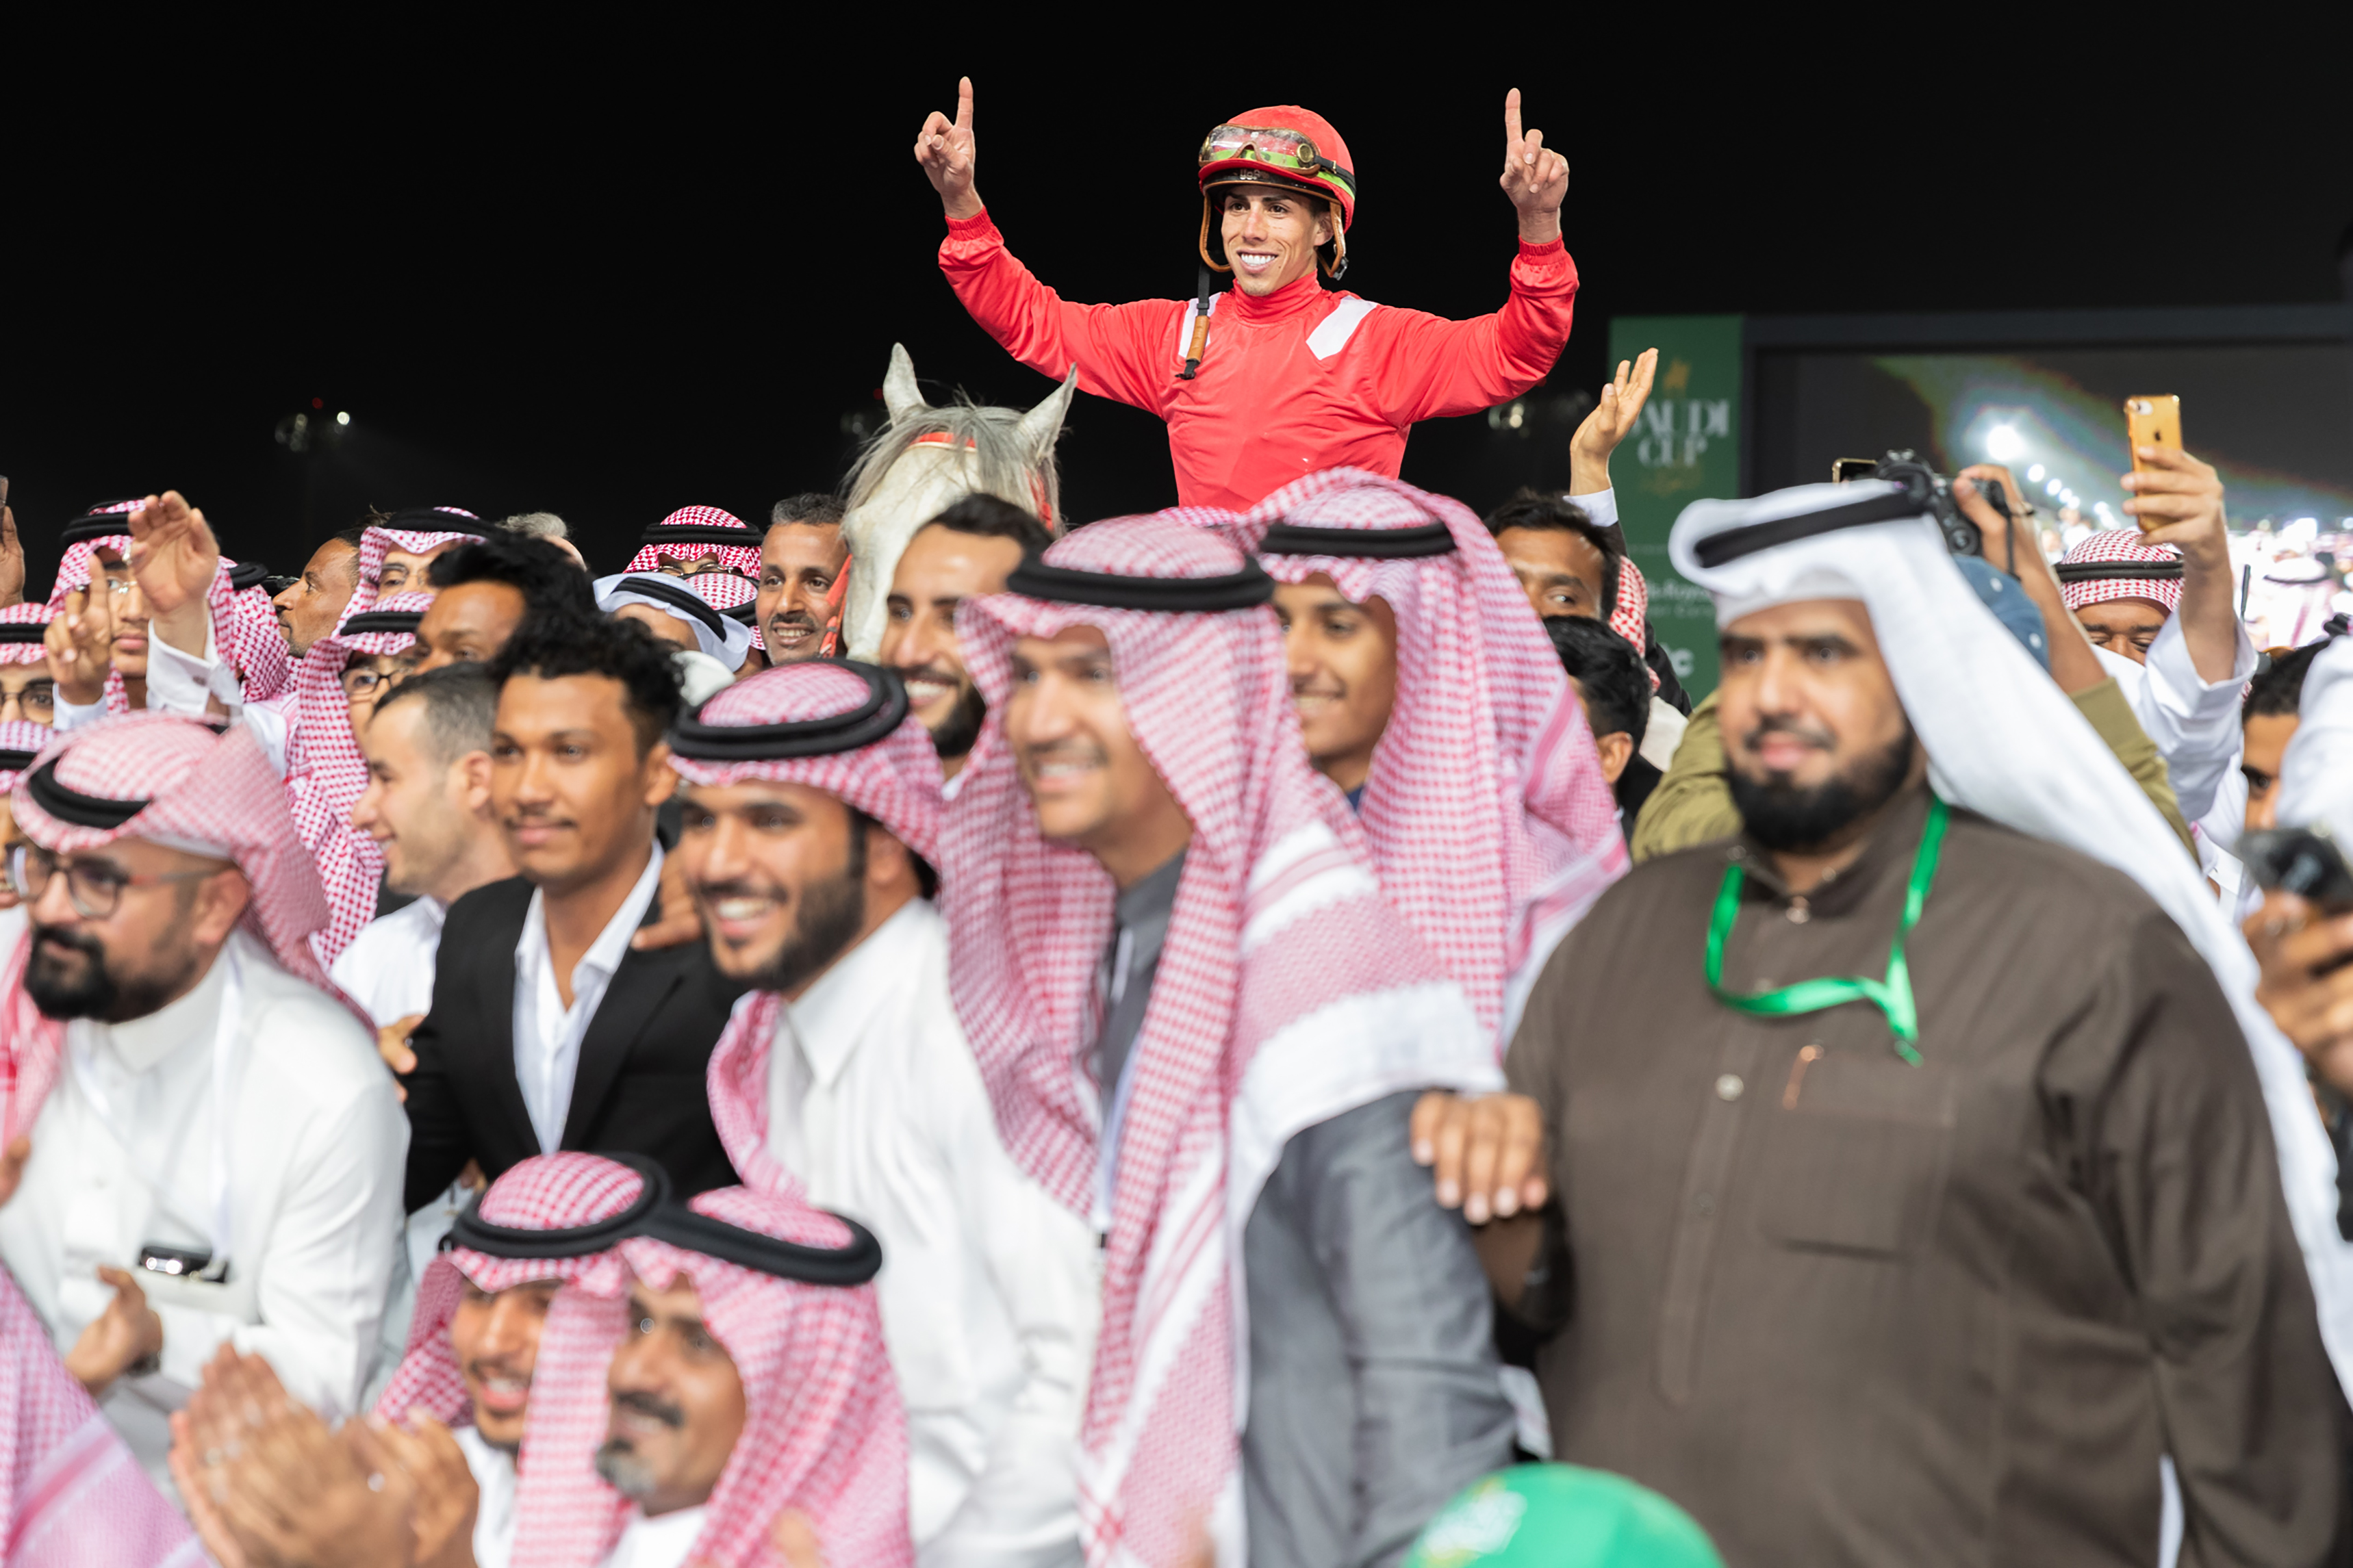 International hero: a jubilant crowd cheers Irad Ortiz Jr, the American champion jockey, after winning the $1.5m Saudia Sprint on Saudi Cup day on locally-trained New York Central for leading Saudi owner Prince Faisal. Photo: Jockey Club of Saudi Arabia